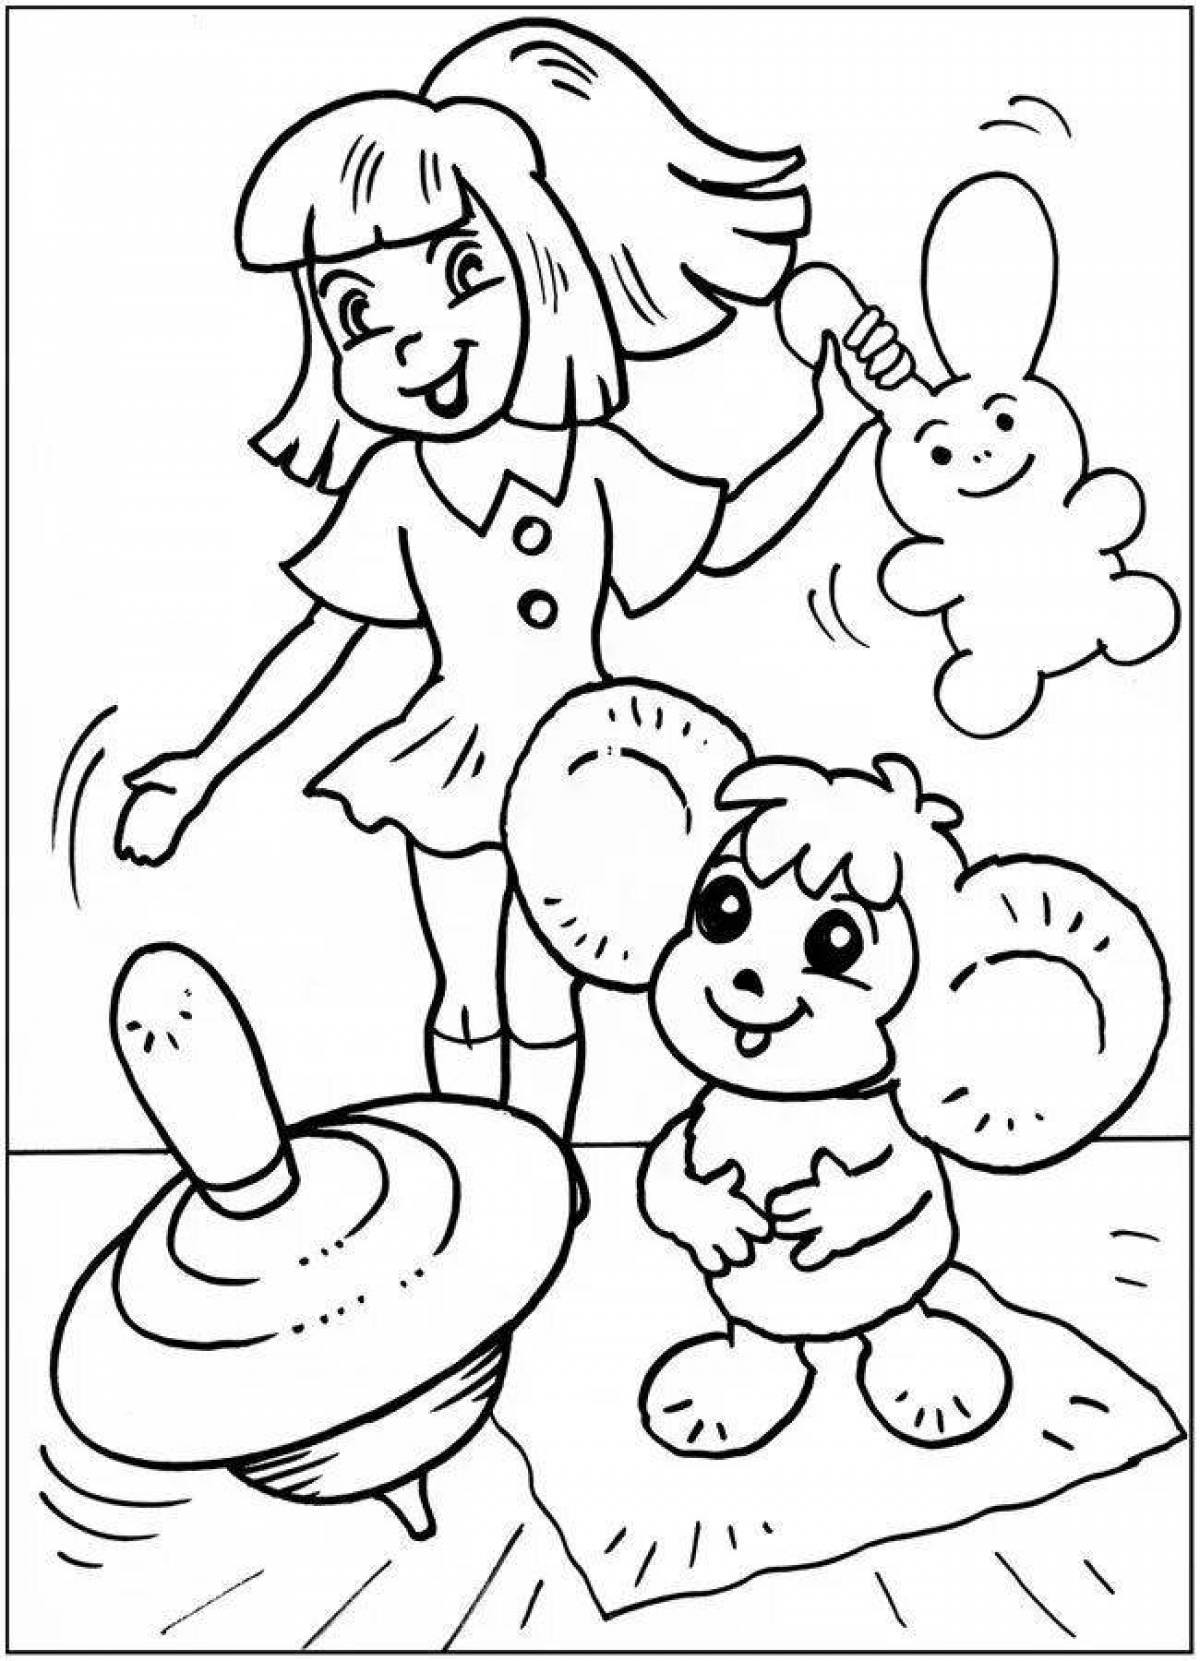 Coloring page glamorous cheburashka